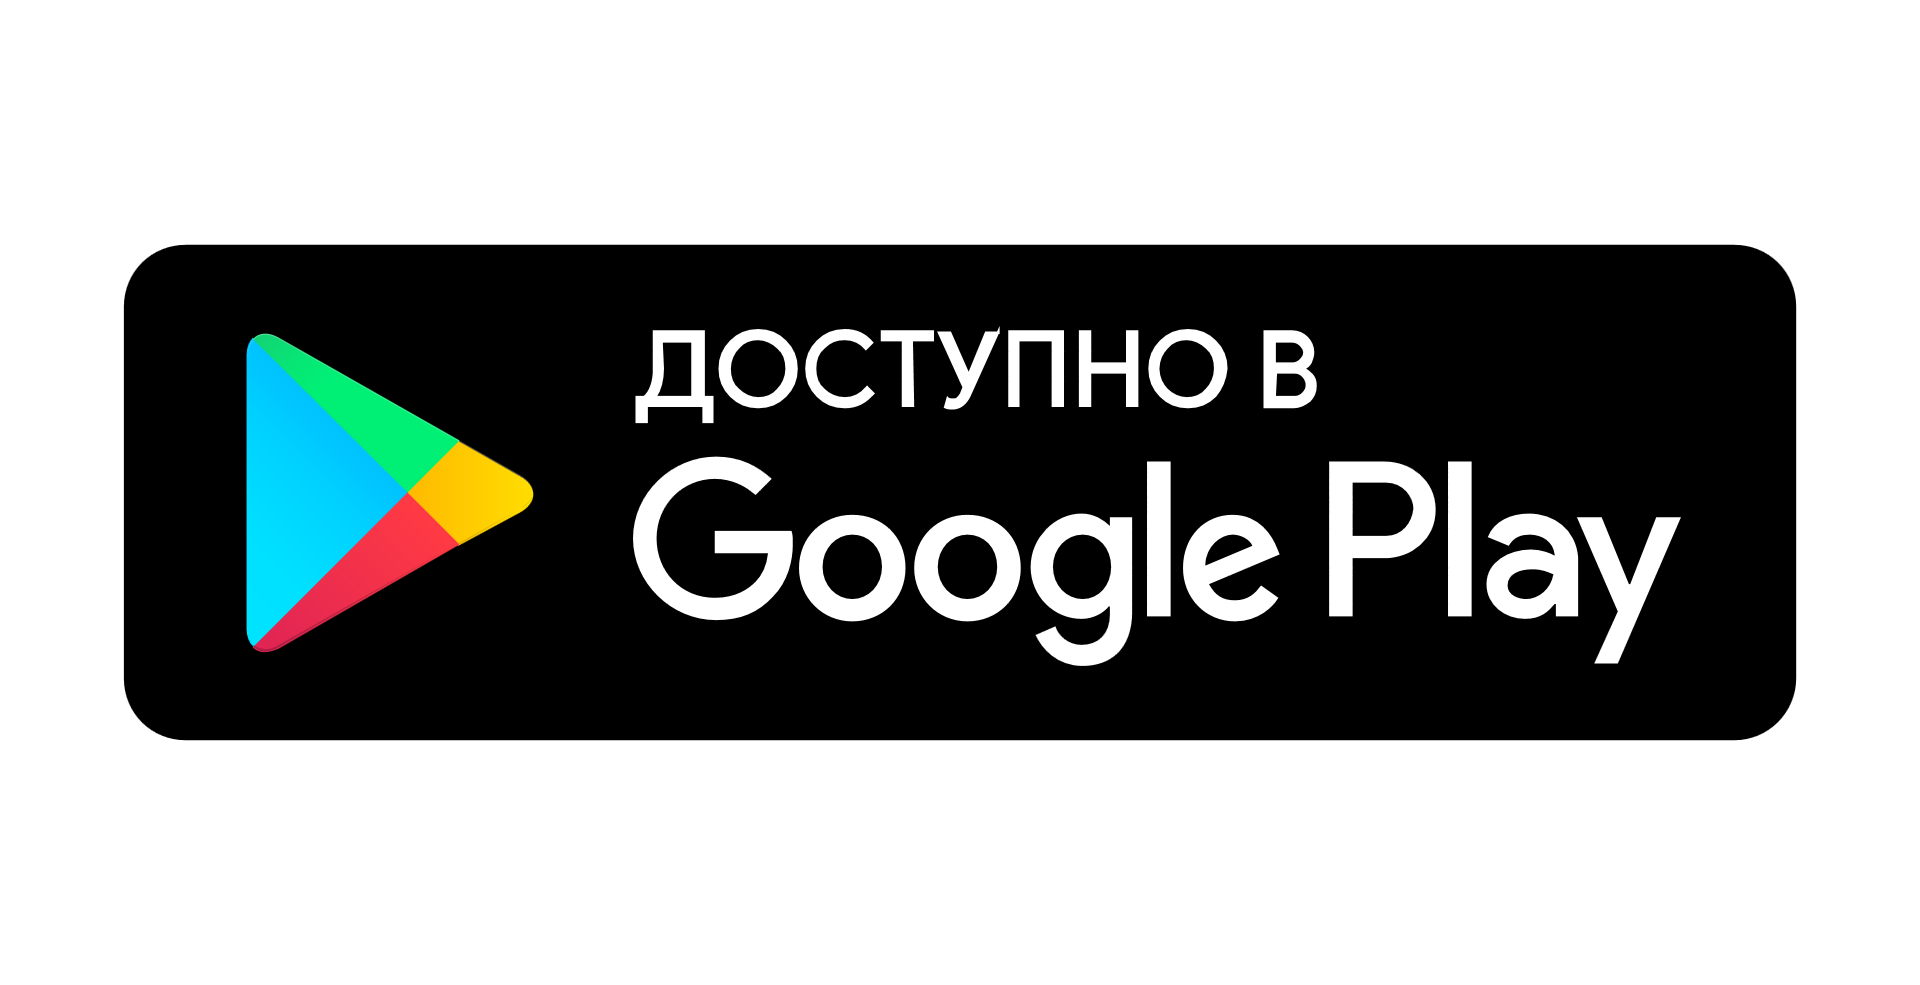 Гугл плей. Логотип Google Play. Доступно в гугл плей. Доступно в гугл плей иконка.